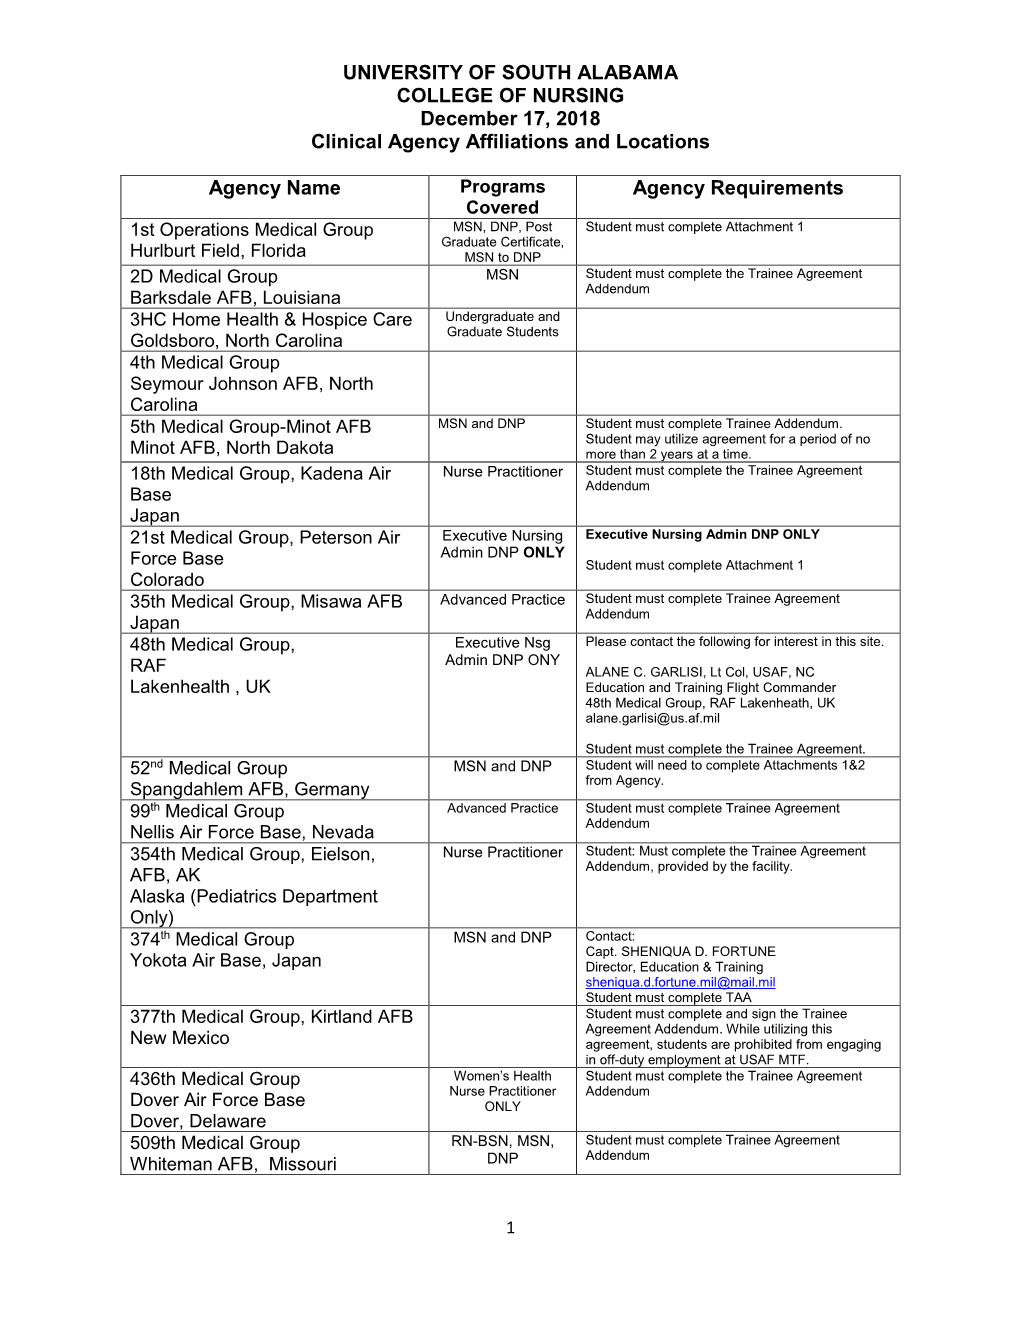 Clinical Agency Affiliation List